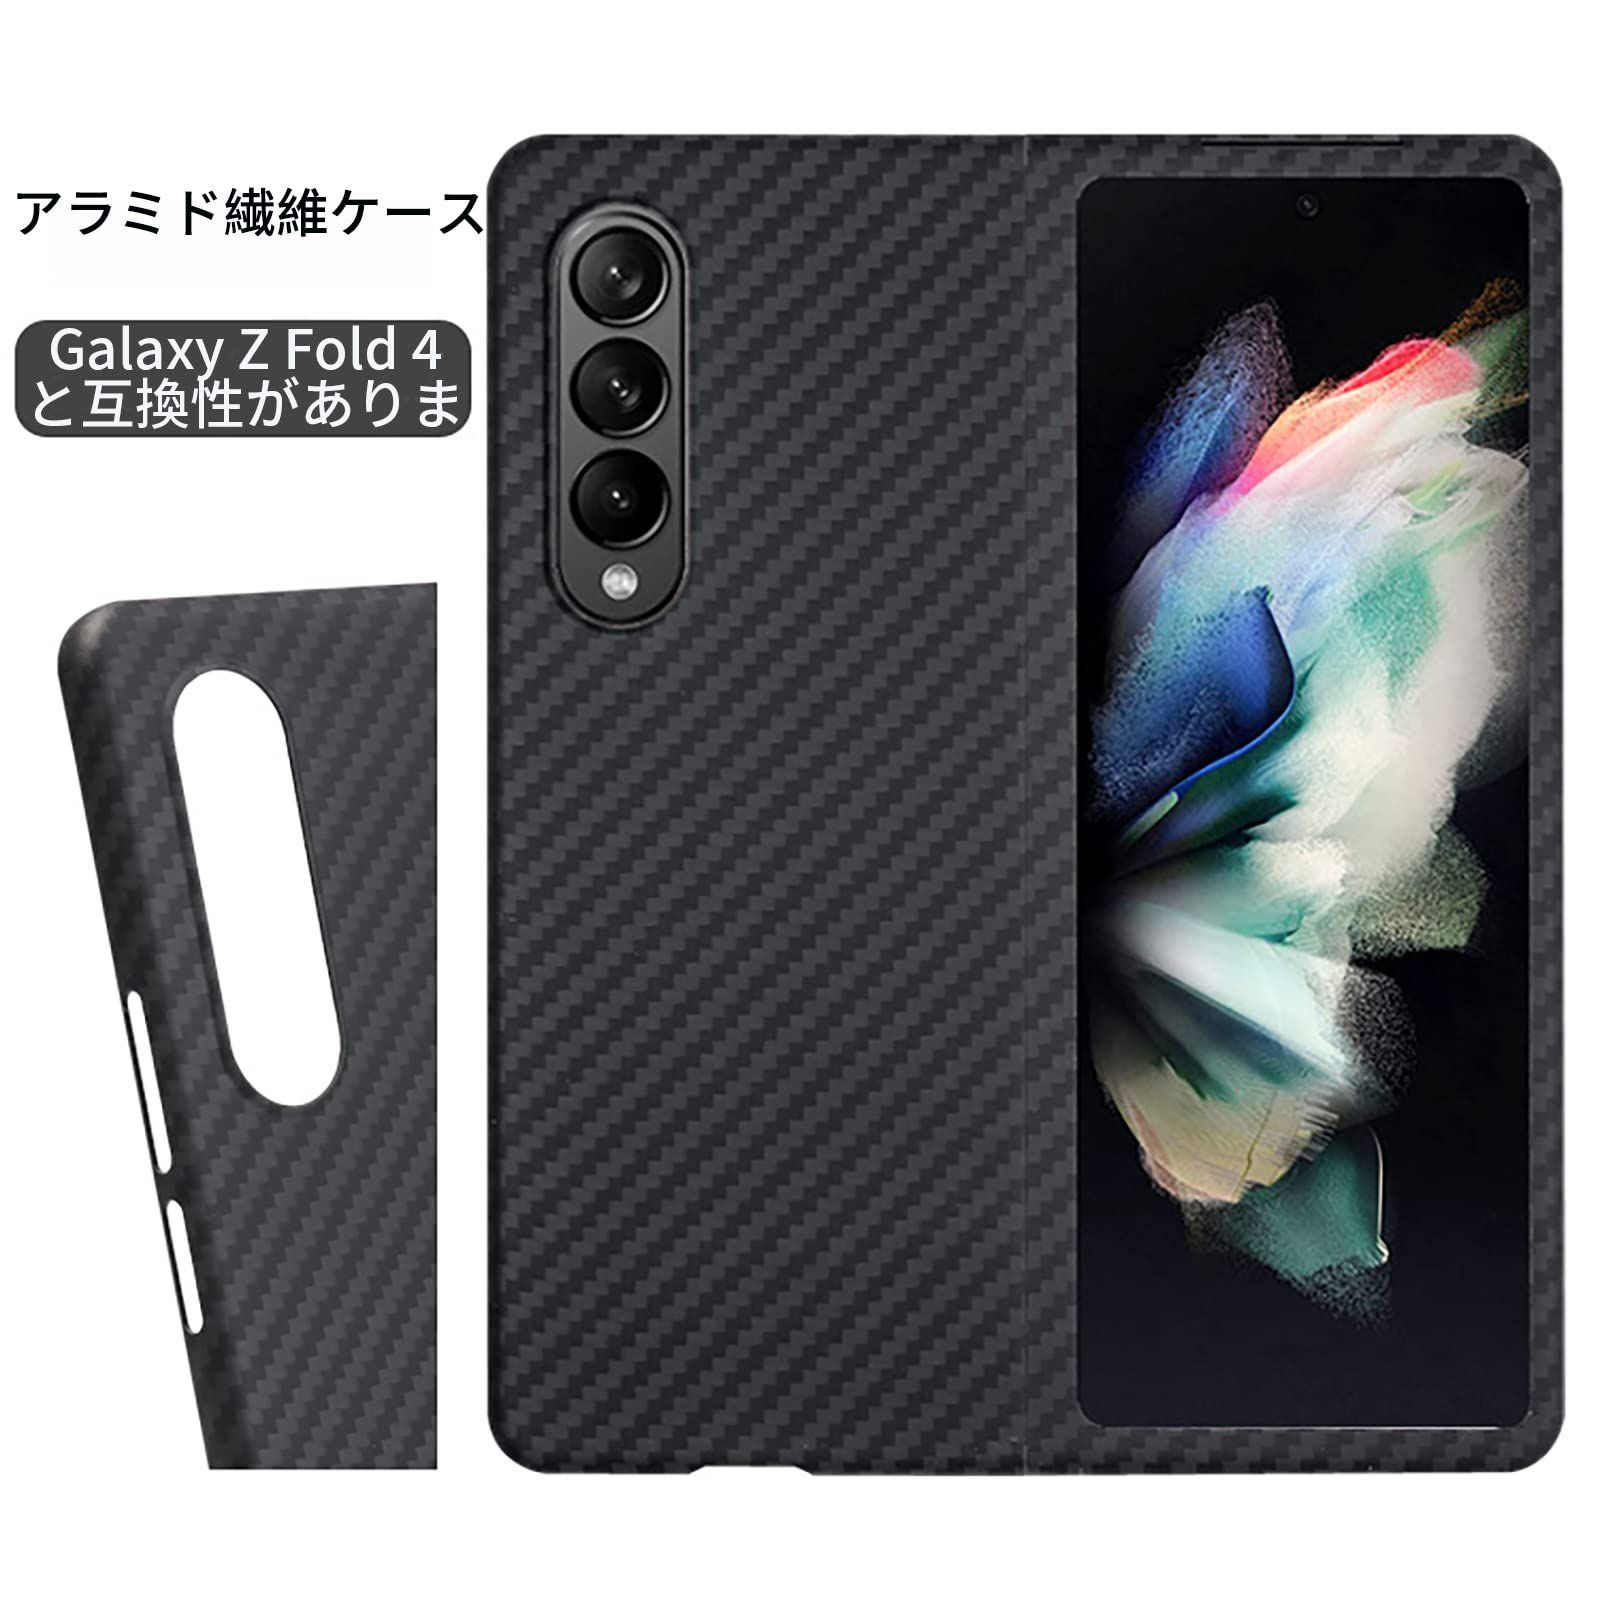 Galaxy Z Fold4 docomo 純正ケース/アラミドケースセット